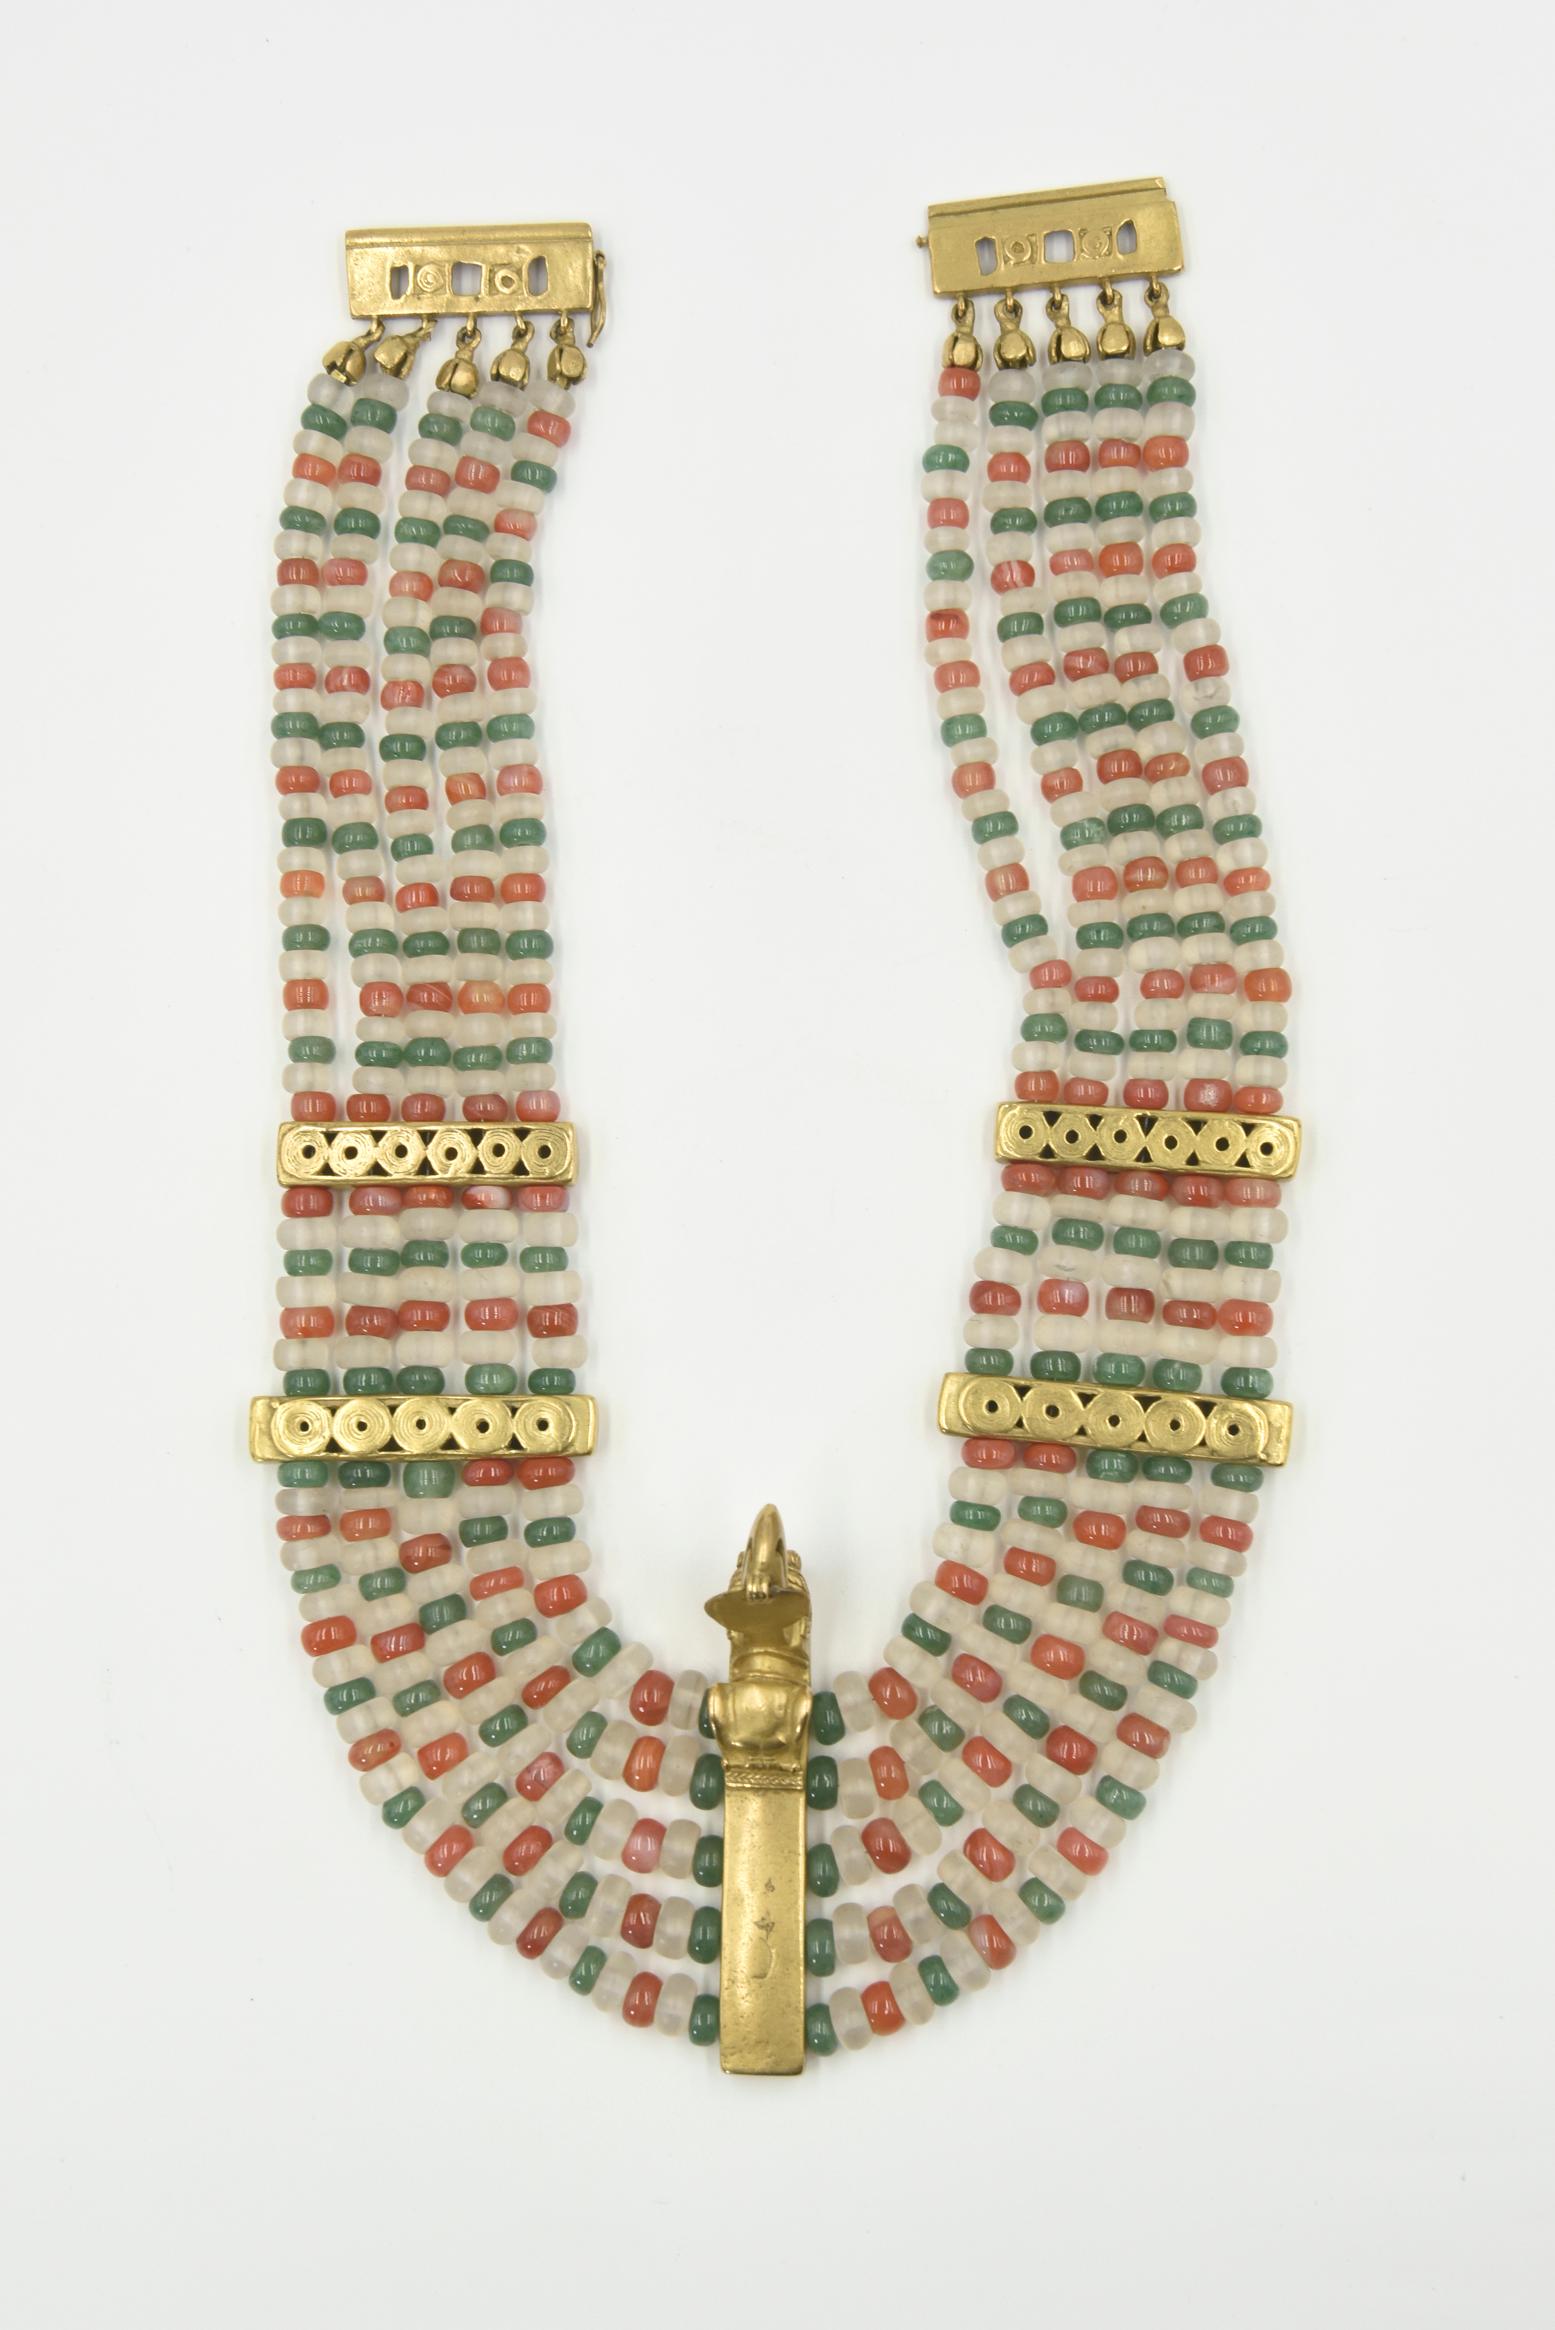 toucan necklace